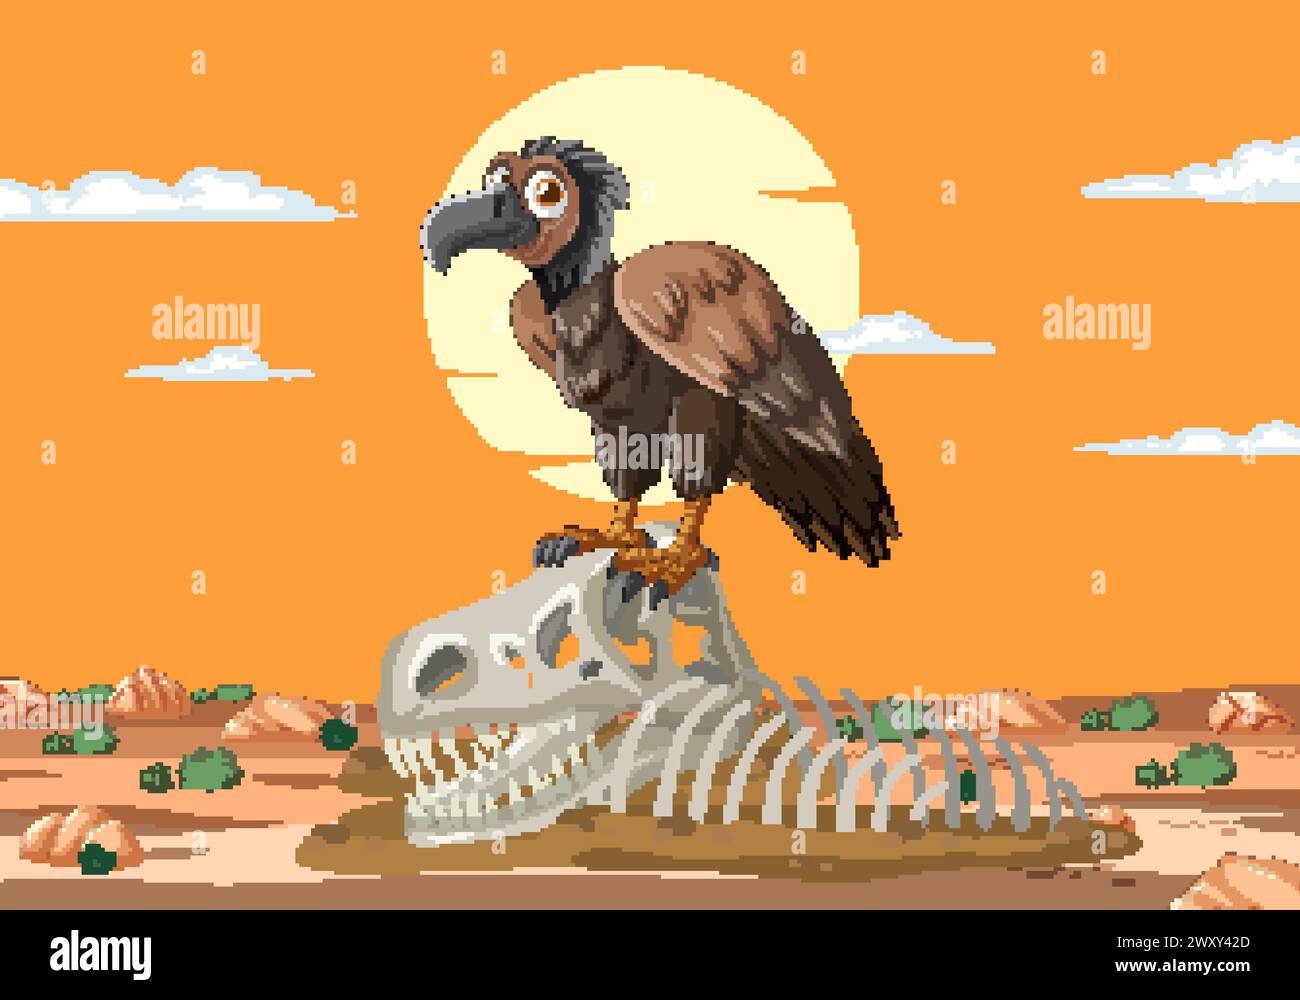 Cartoon vulture standing on a skeleton in desert Stock Vector